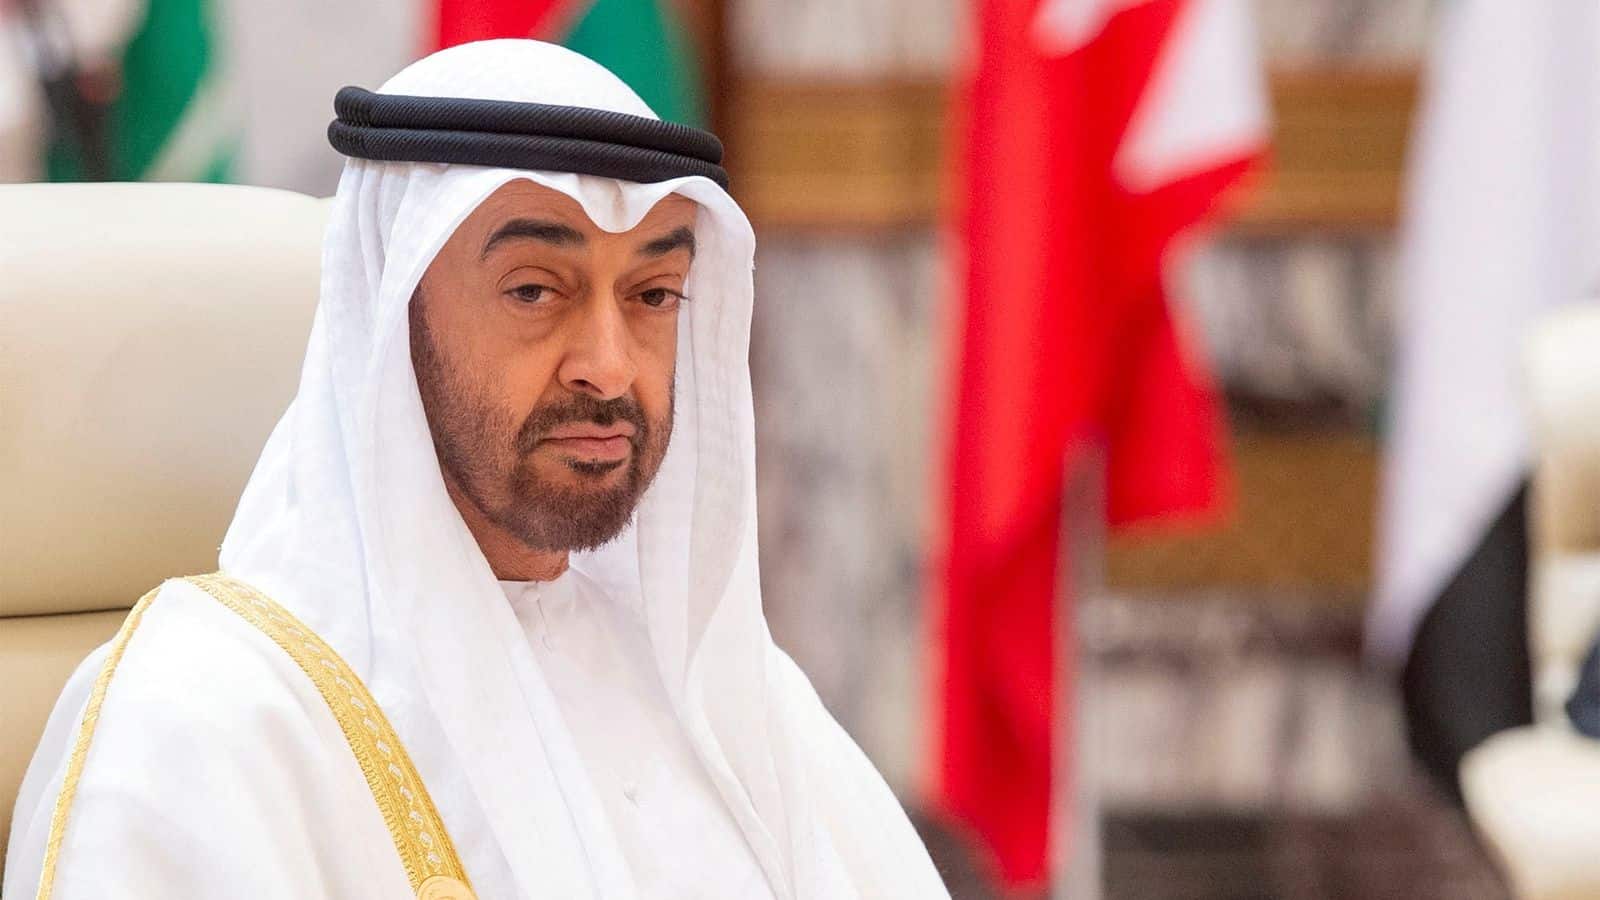 Sheikh Mohammed bin Zayed al Nahyan